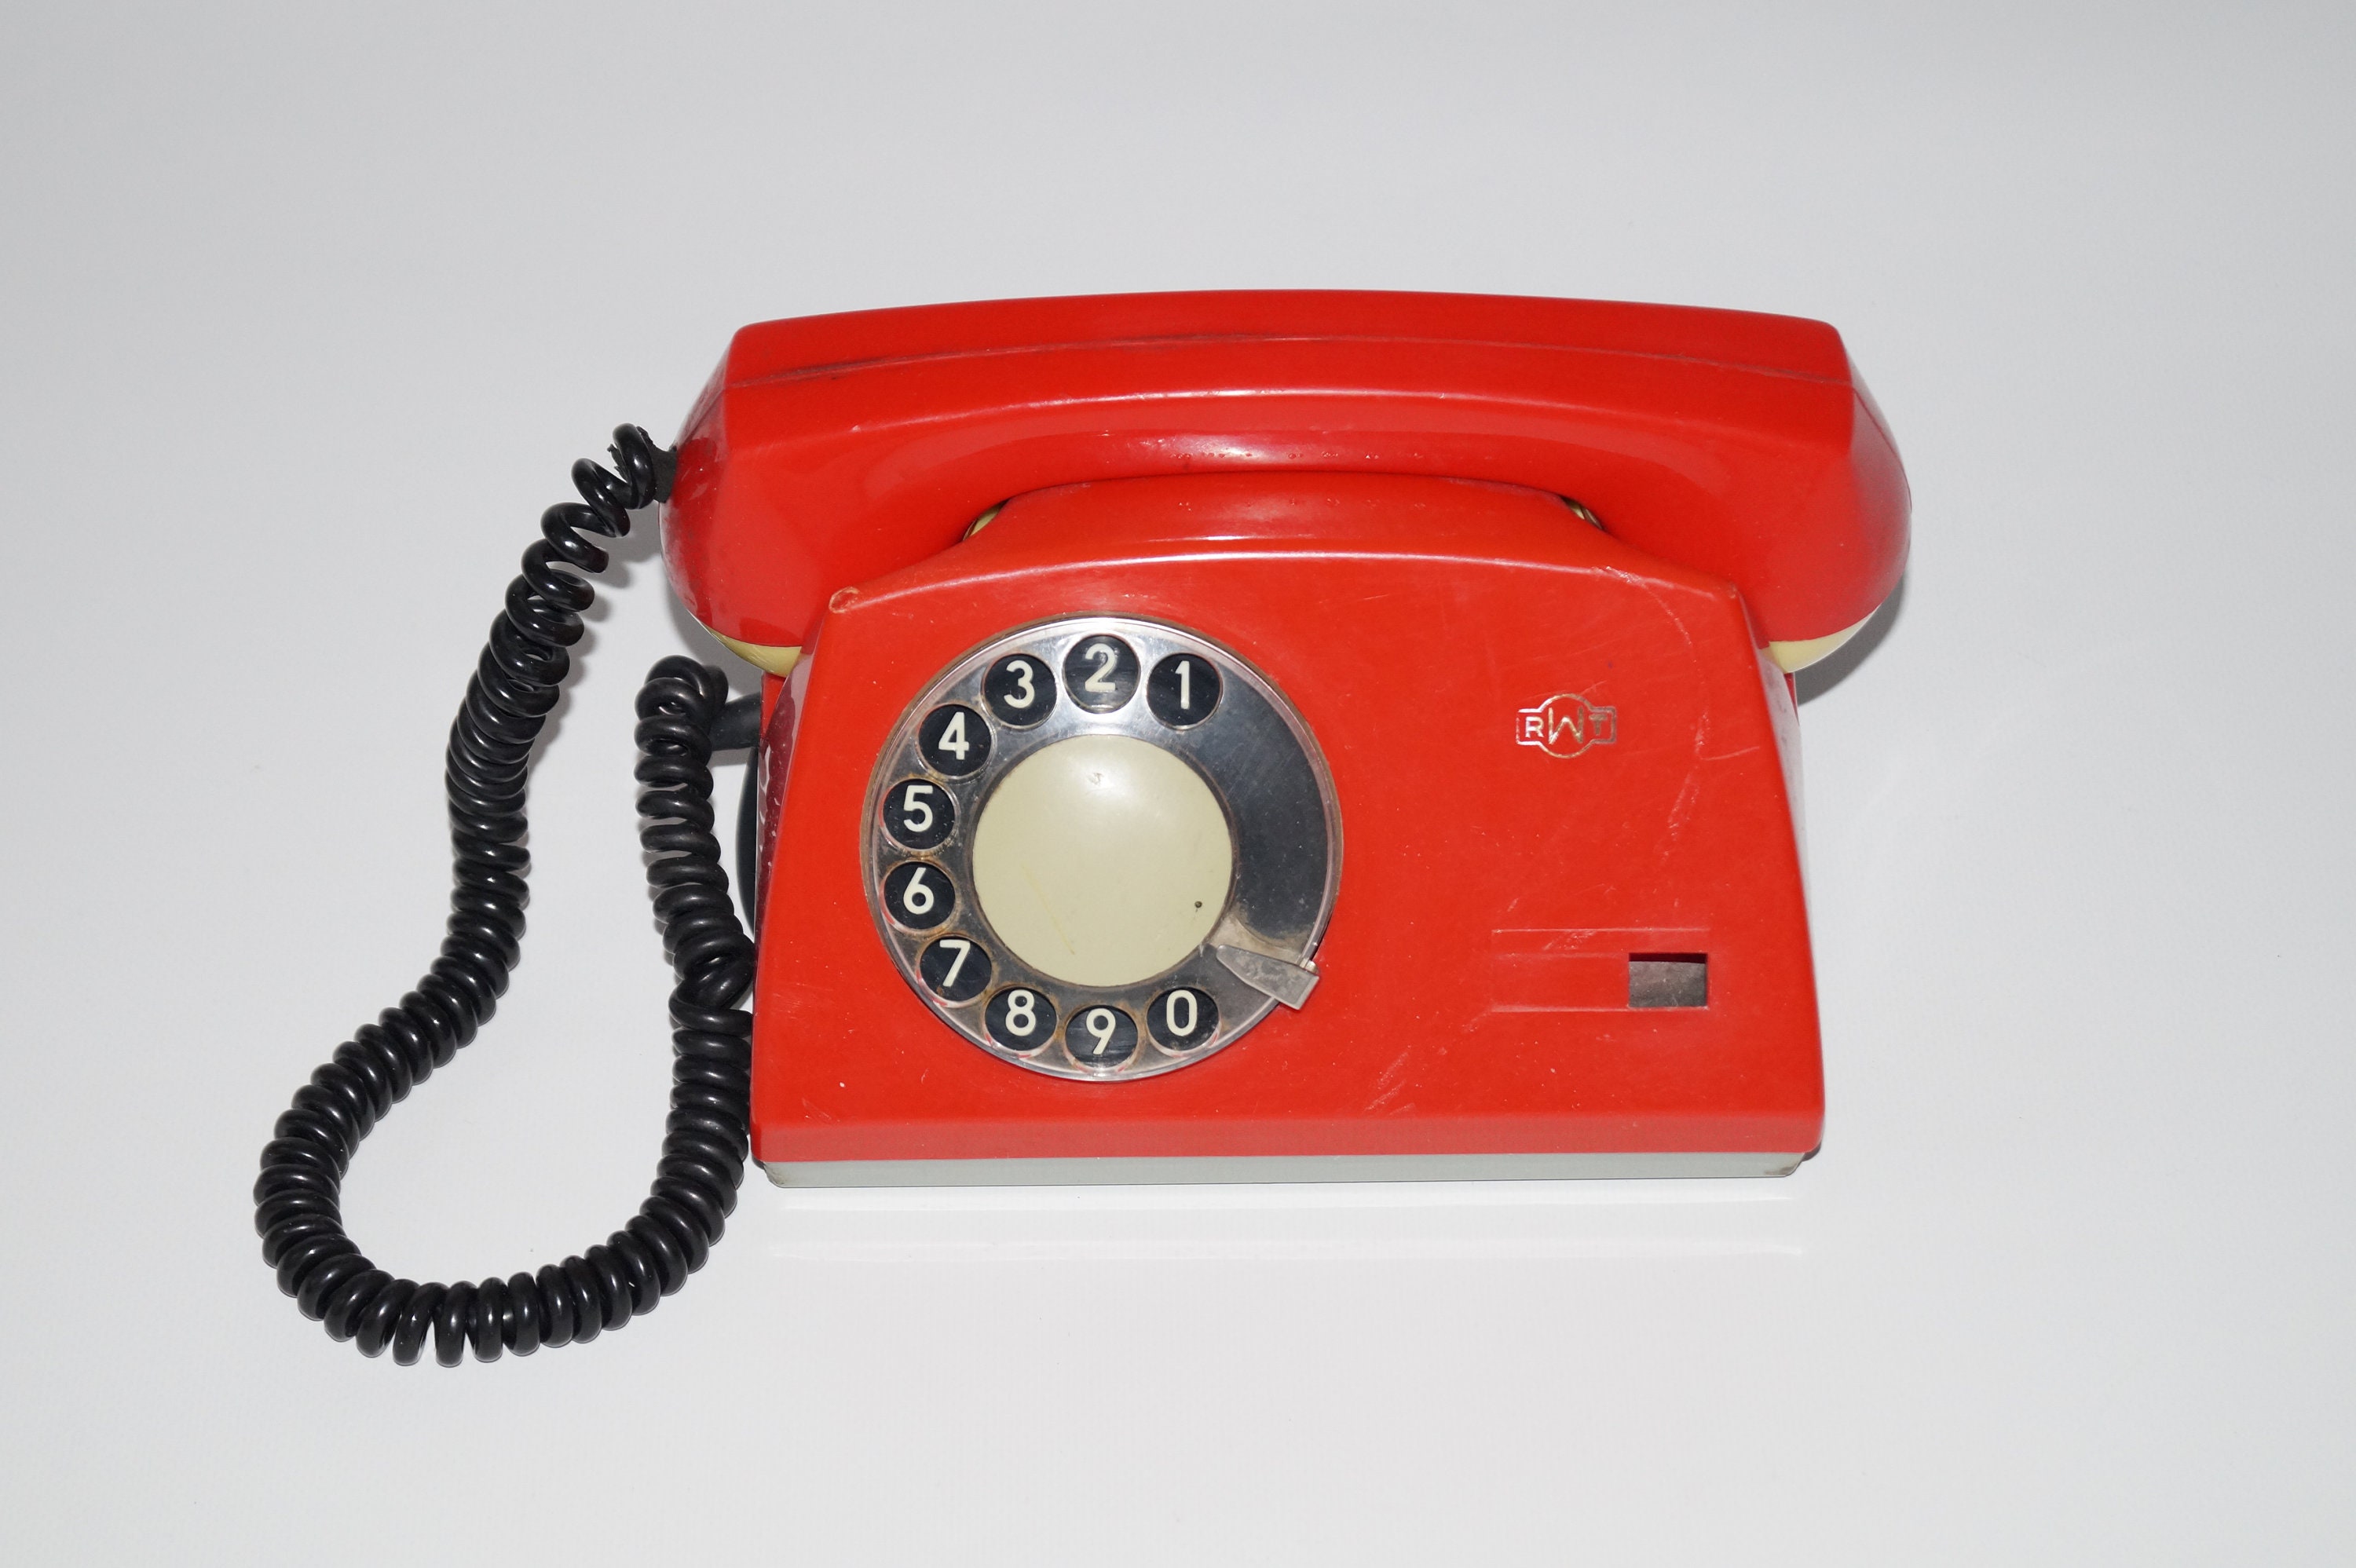 Телефон 50 70 70. Телефонный аппарат спектр та-1146. Советский телефонный аппарат. Красный телефонный аппарат. Старинный телефонный аппарат.